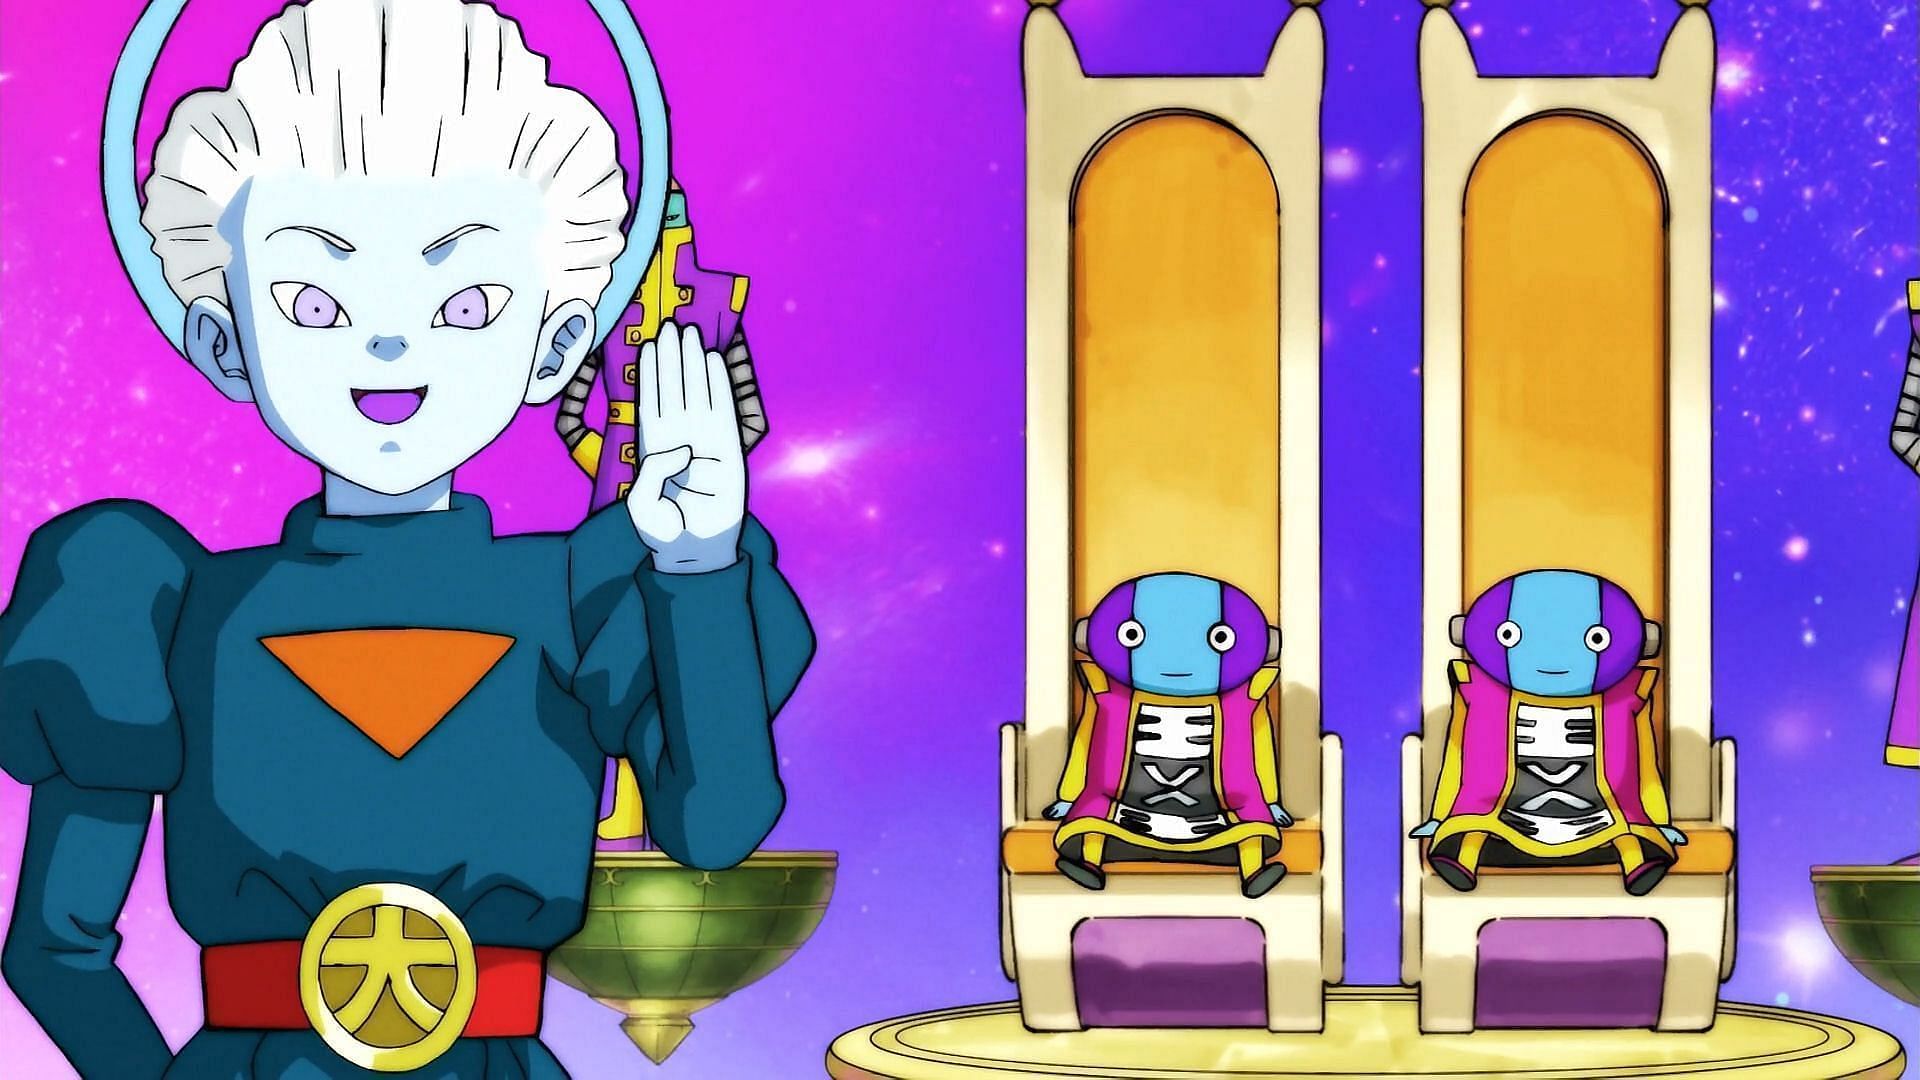 Grand Priest seen alongside Zeno in the Dragon Ball Super series (Image via Toei Animation)